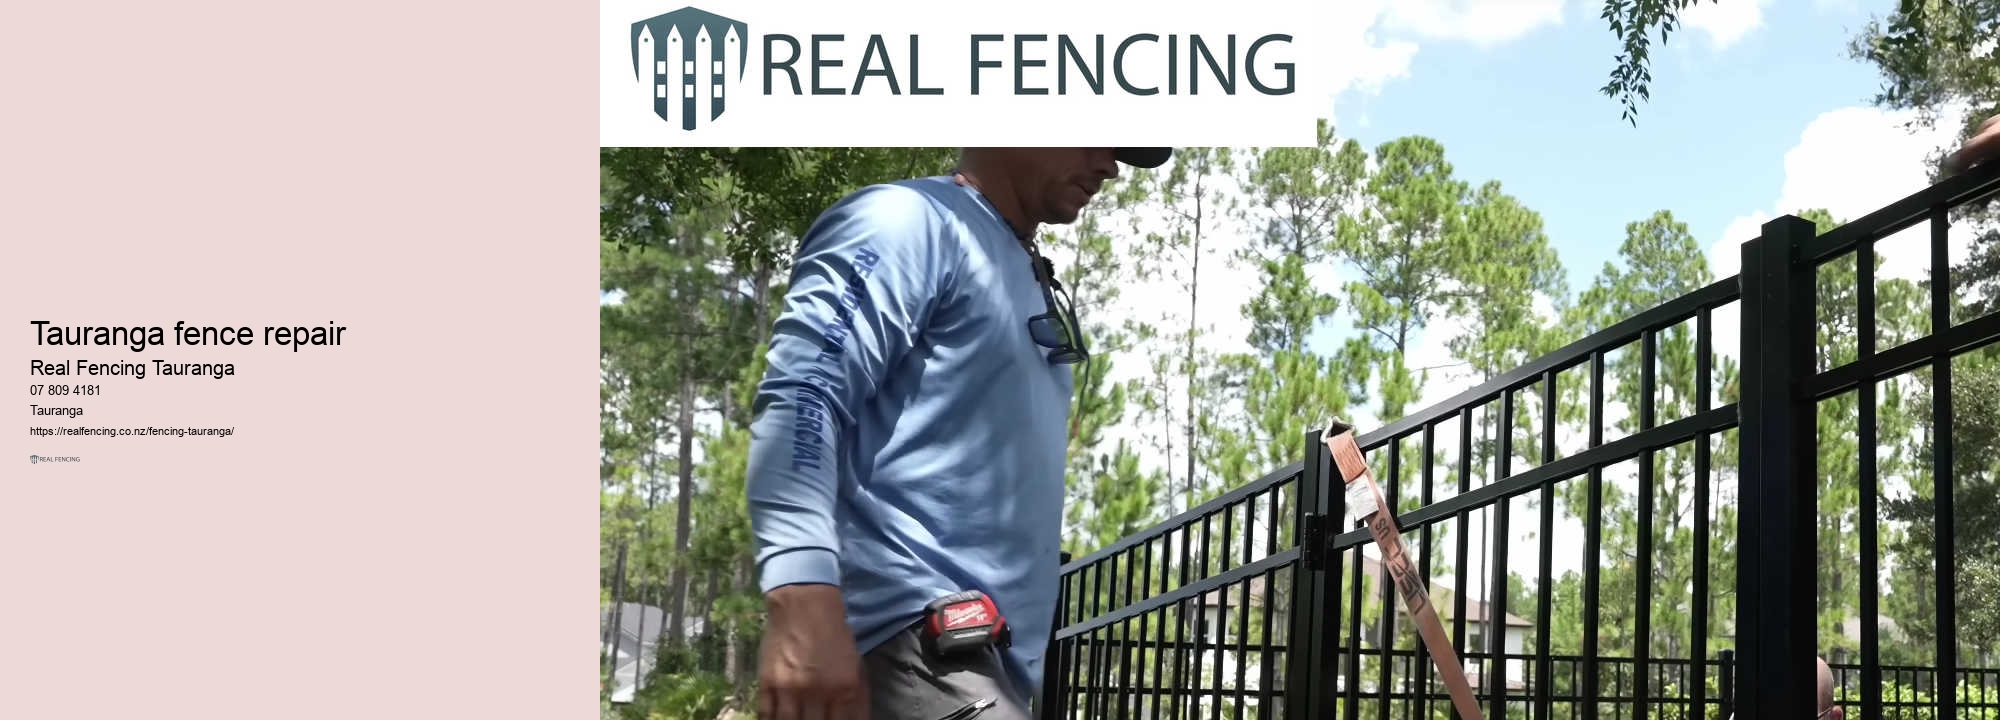 Fence installers Tauranga